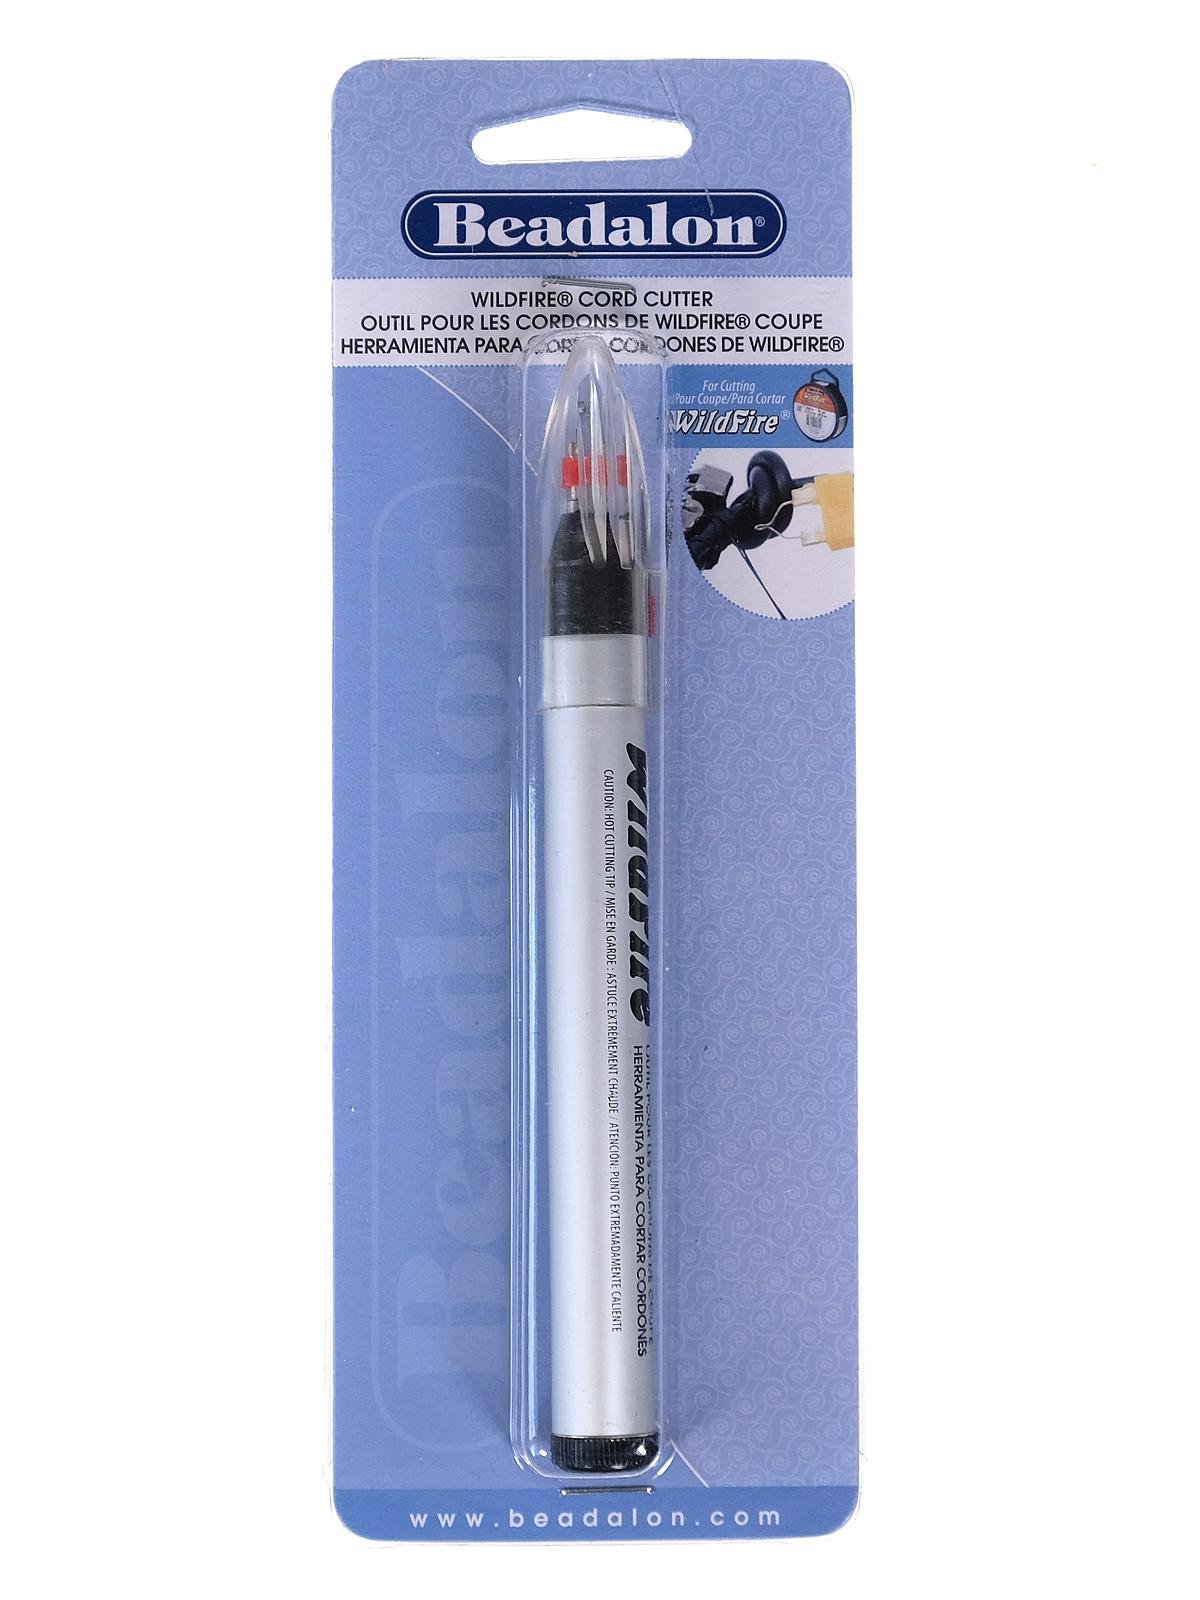 Beadalon - Wildfire Cord Cutter